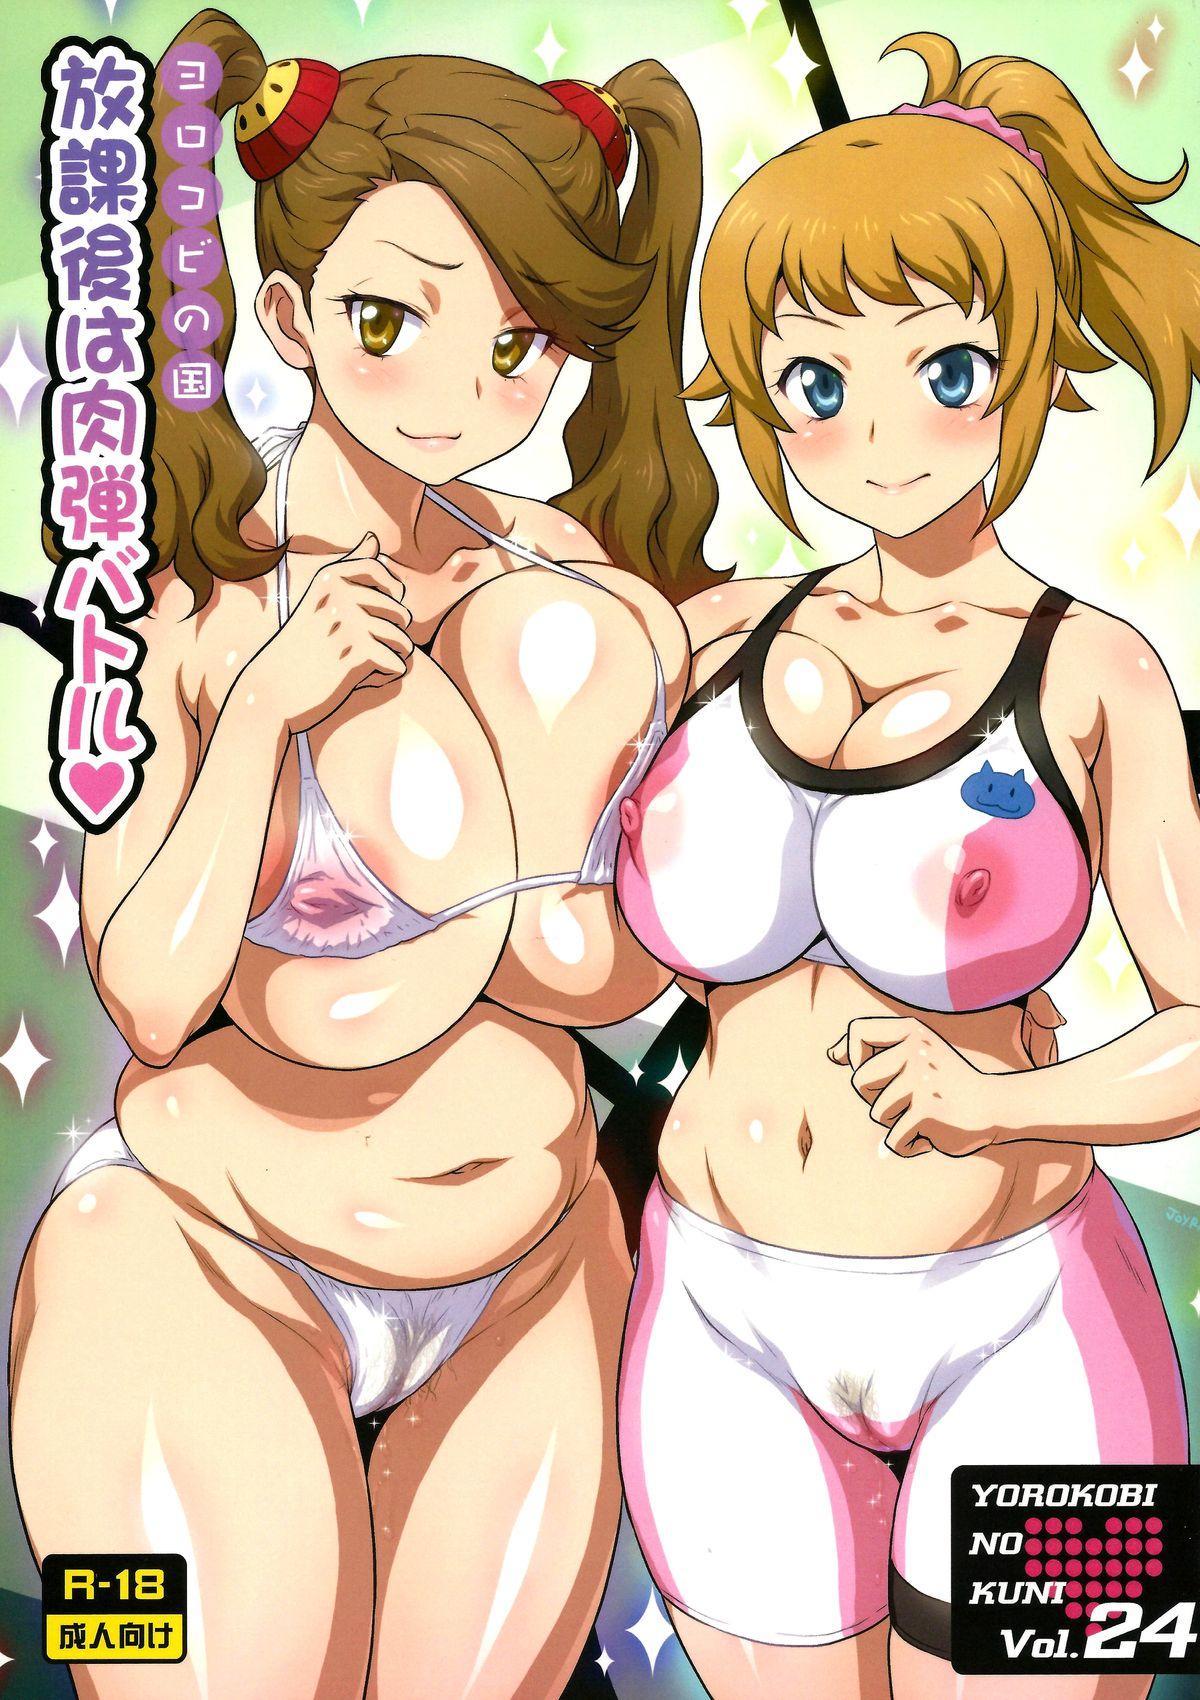 Pregnant Yorokobi no Kuni Vol. 24 Houkago wa Nikudan Battle | After School Human Bullet Battle - Gundam build fighters try 18 Year Old Porn - Picture 1